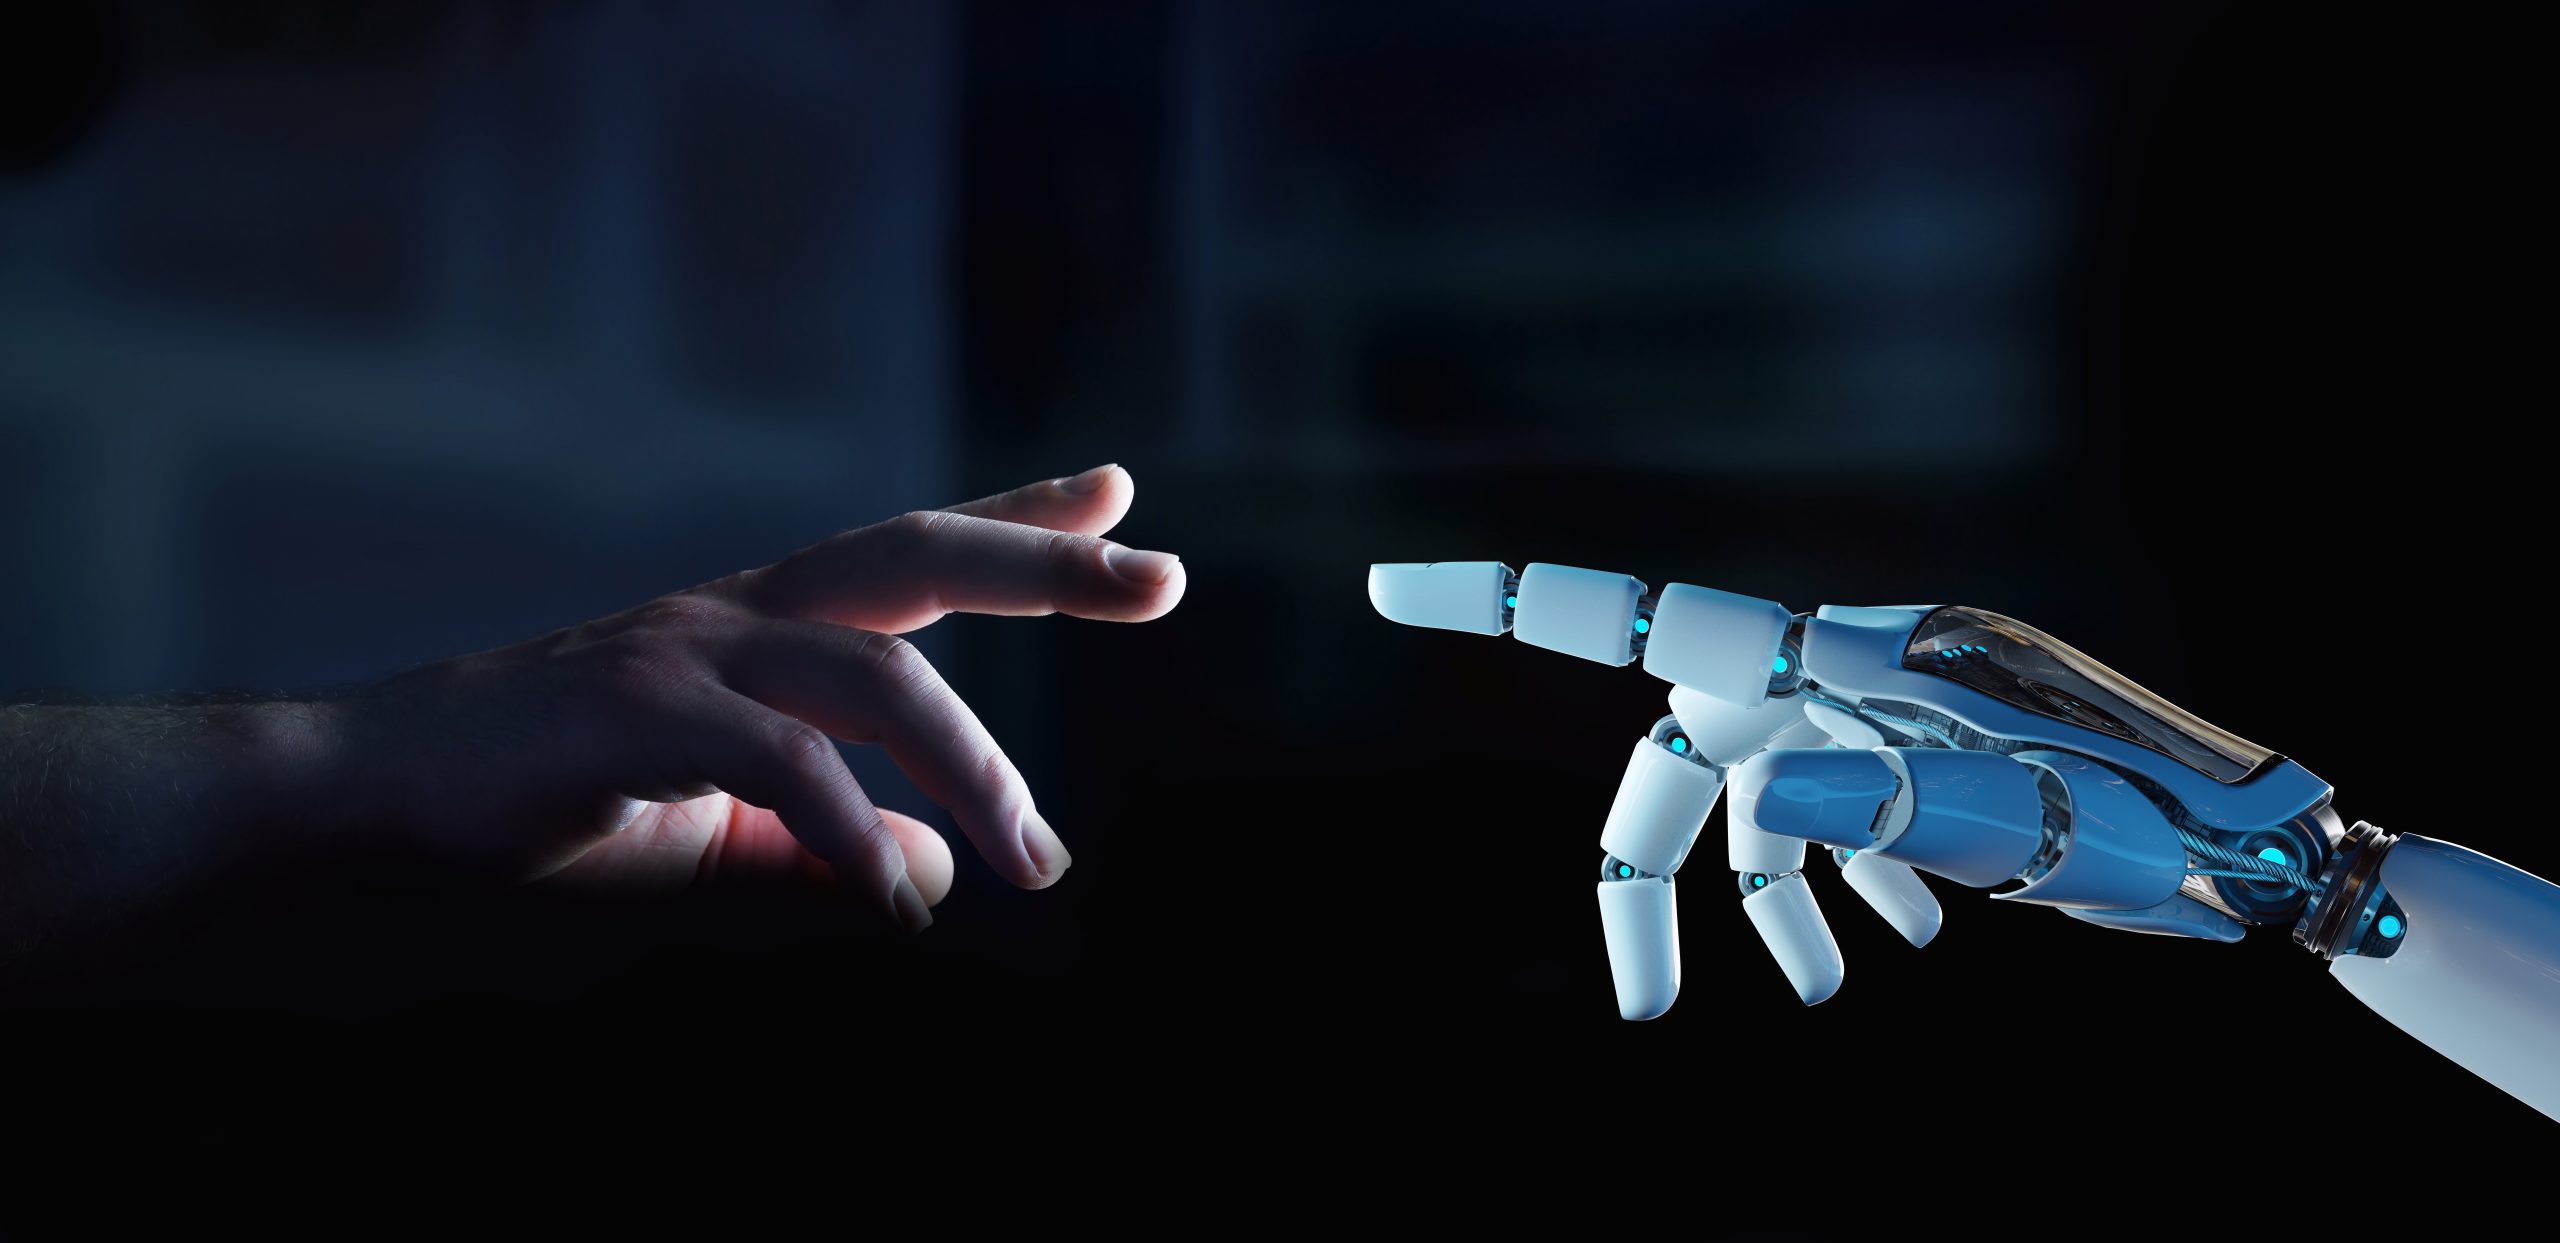 An illustration showing Artificial Intelligence Robots. Depositphotos.